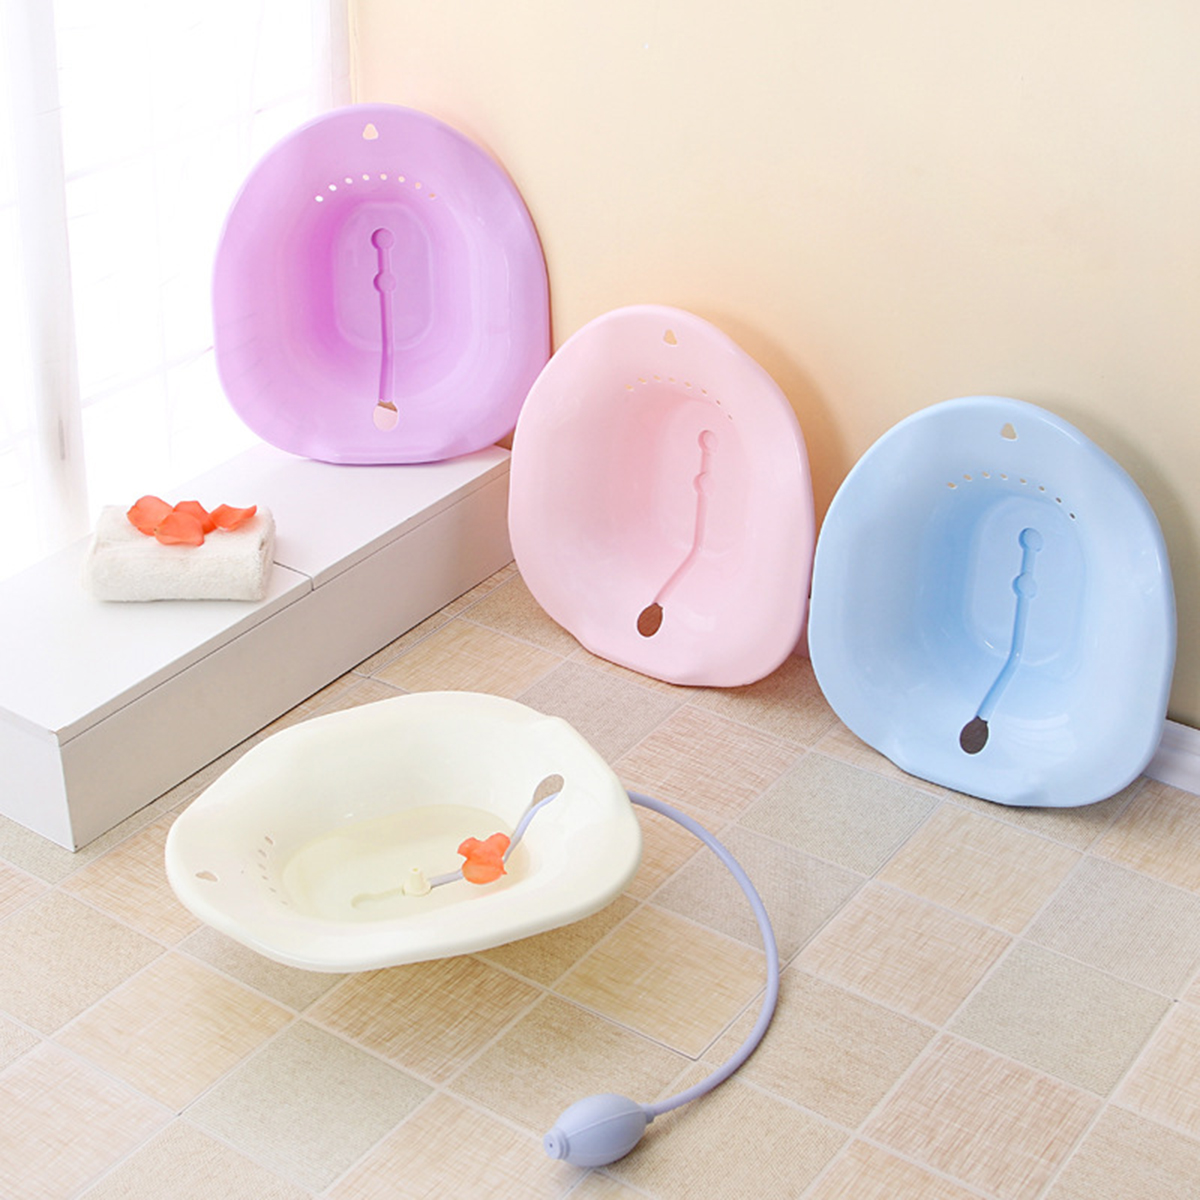 

2.5L Portable Bidet Sitz Bath Tub Washing Nursing Basin Kit With Sprayer On Toilet